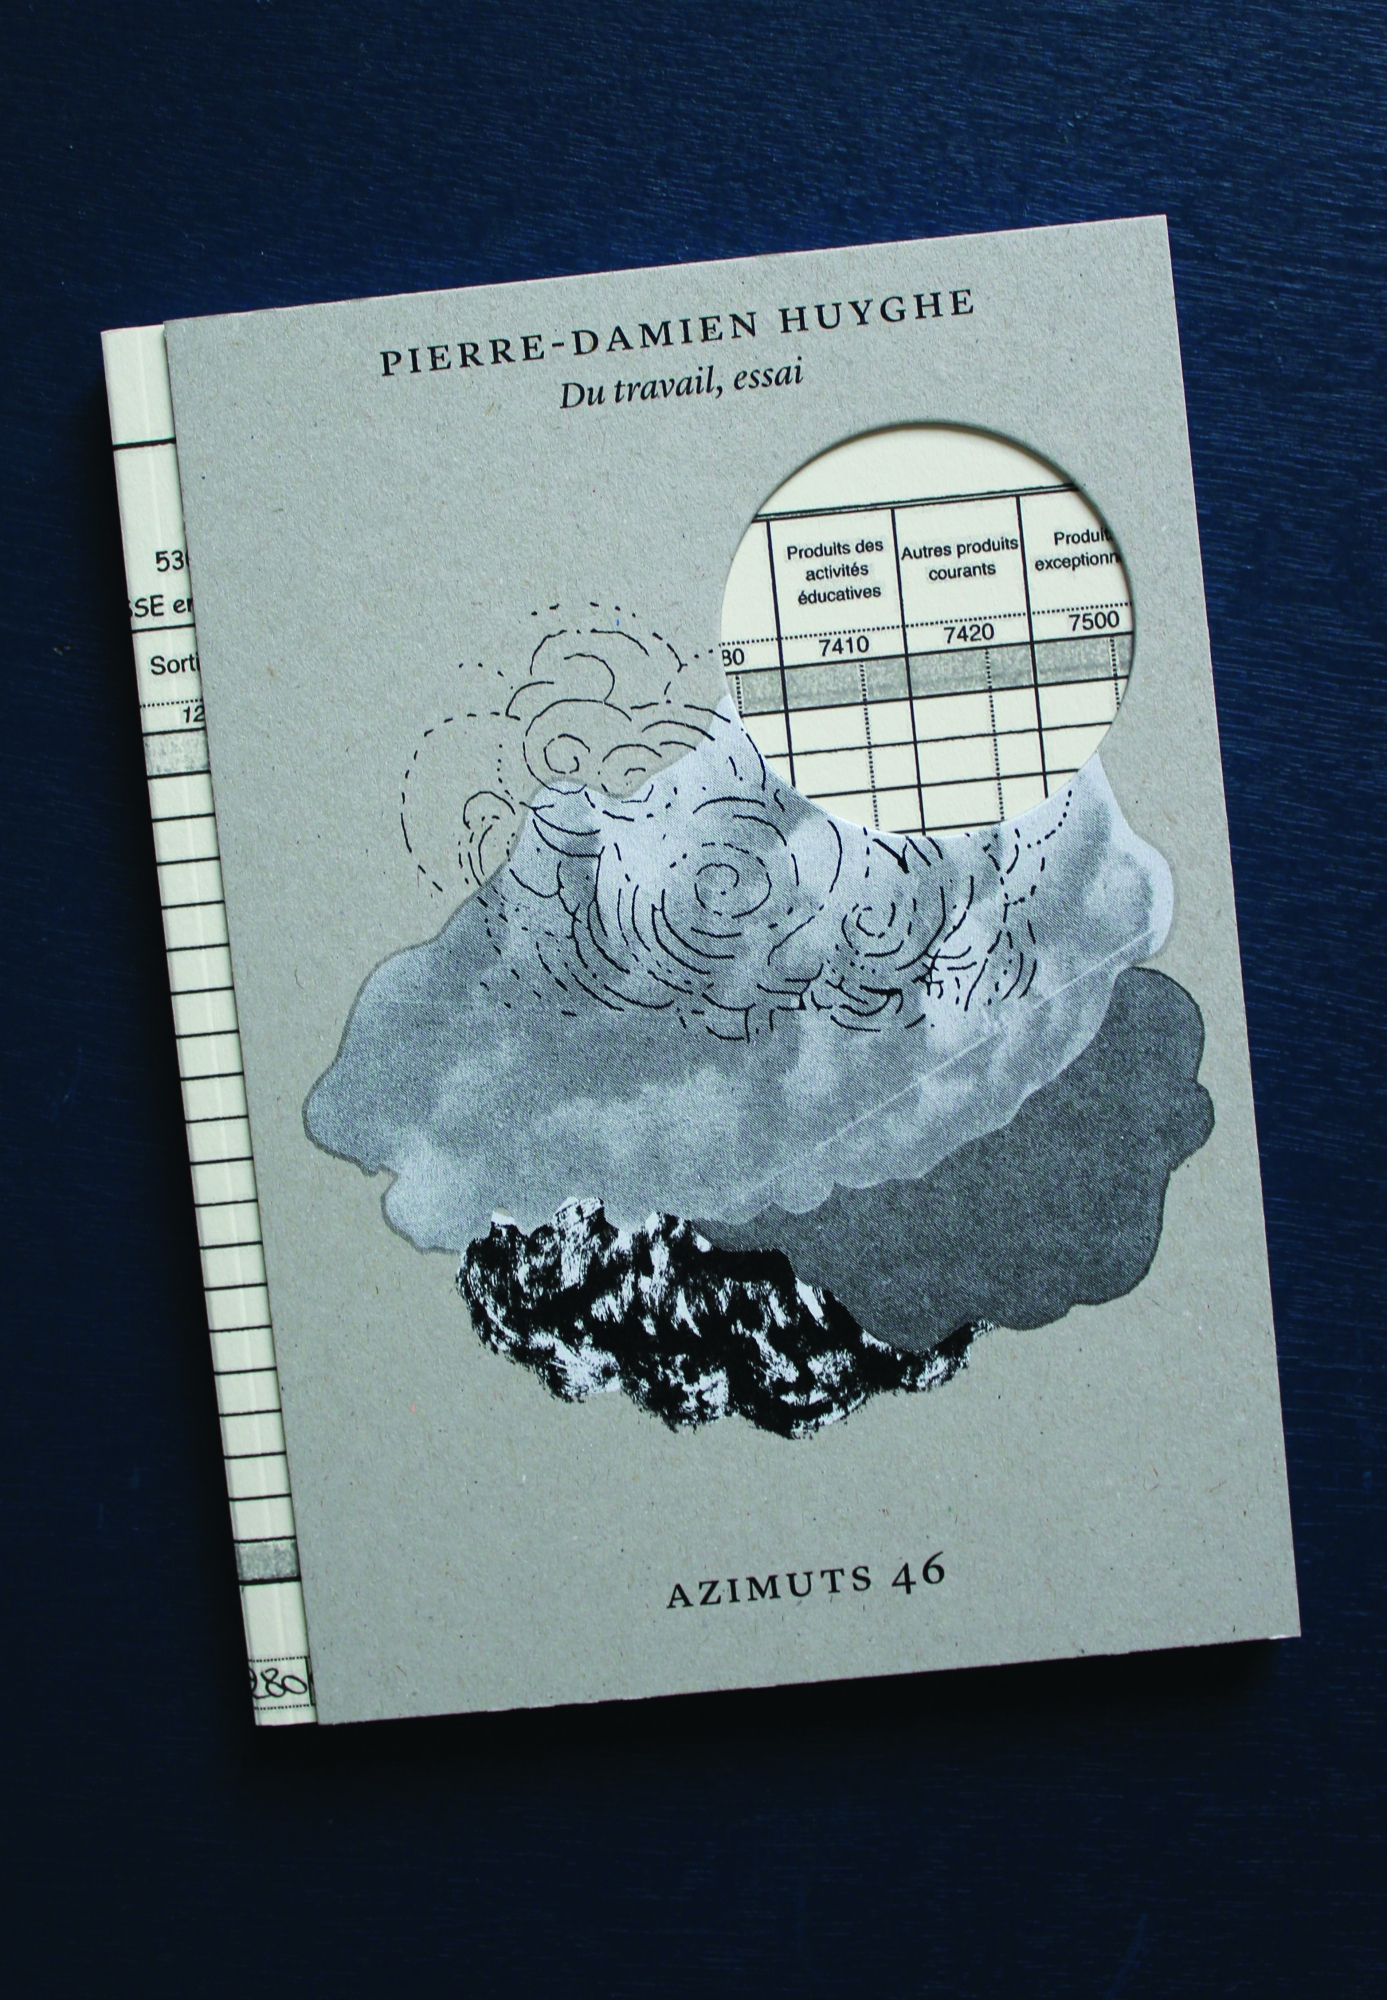 Azimuts n°46 - Du travail, essai - Pierre-Damien Huyghe 